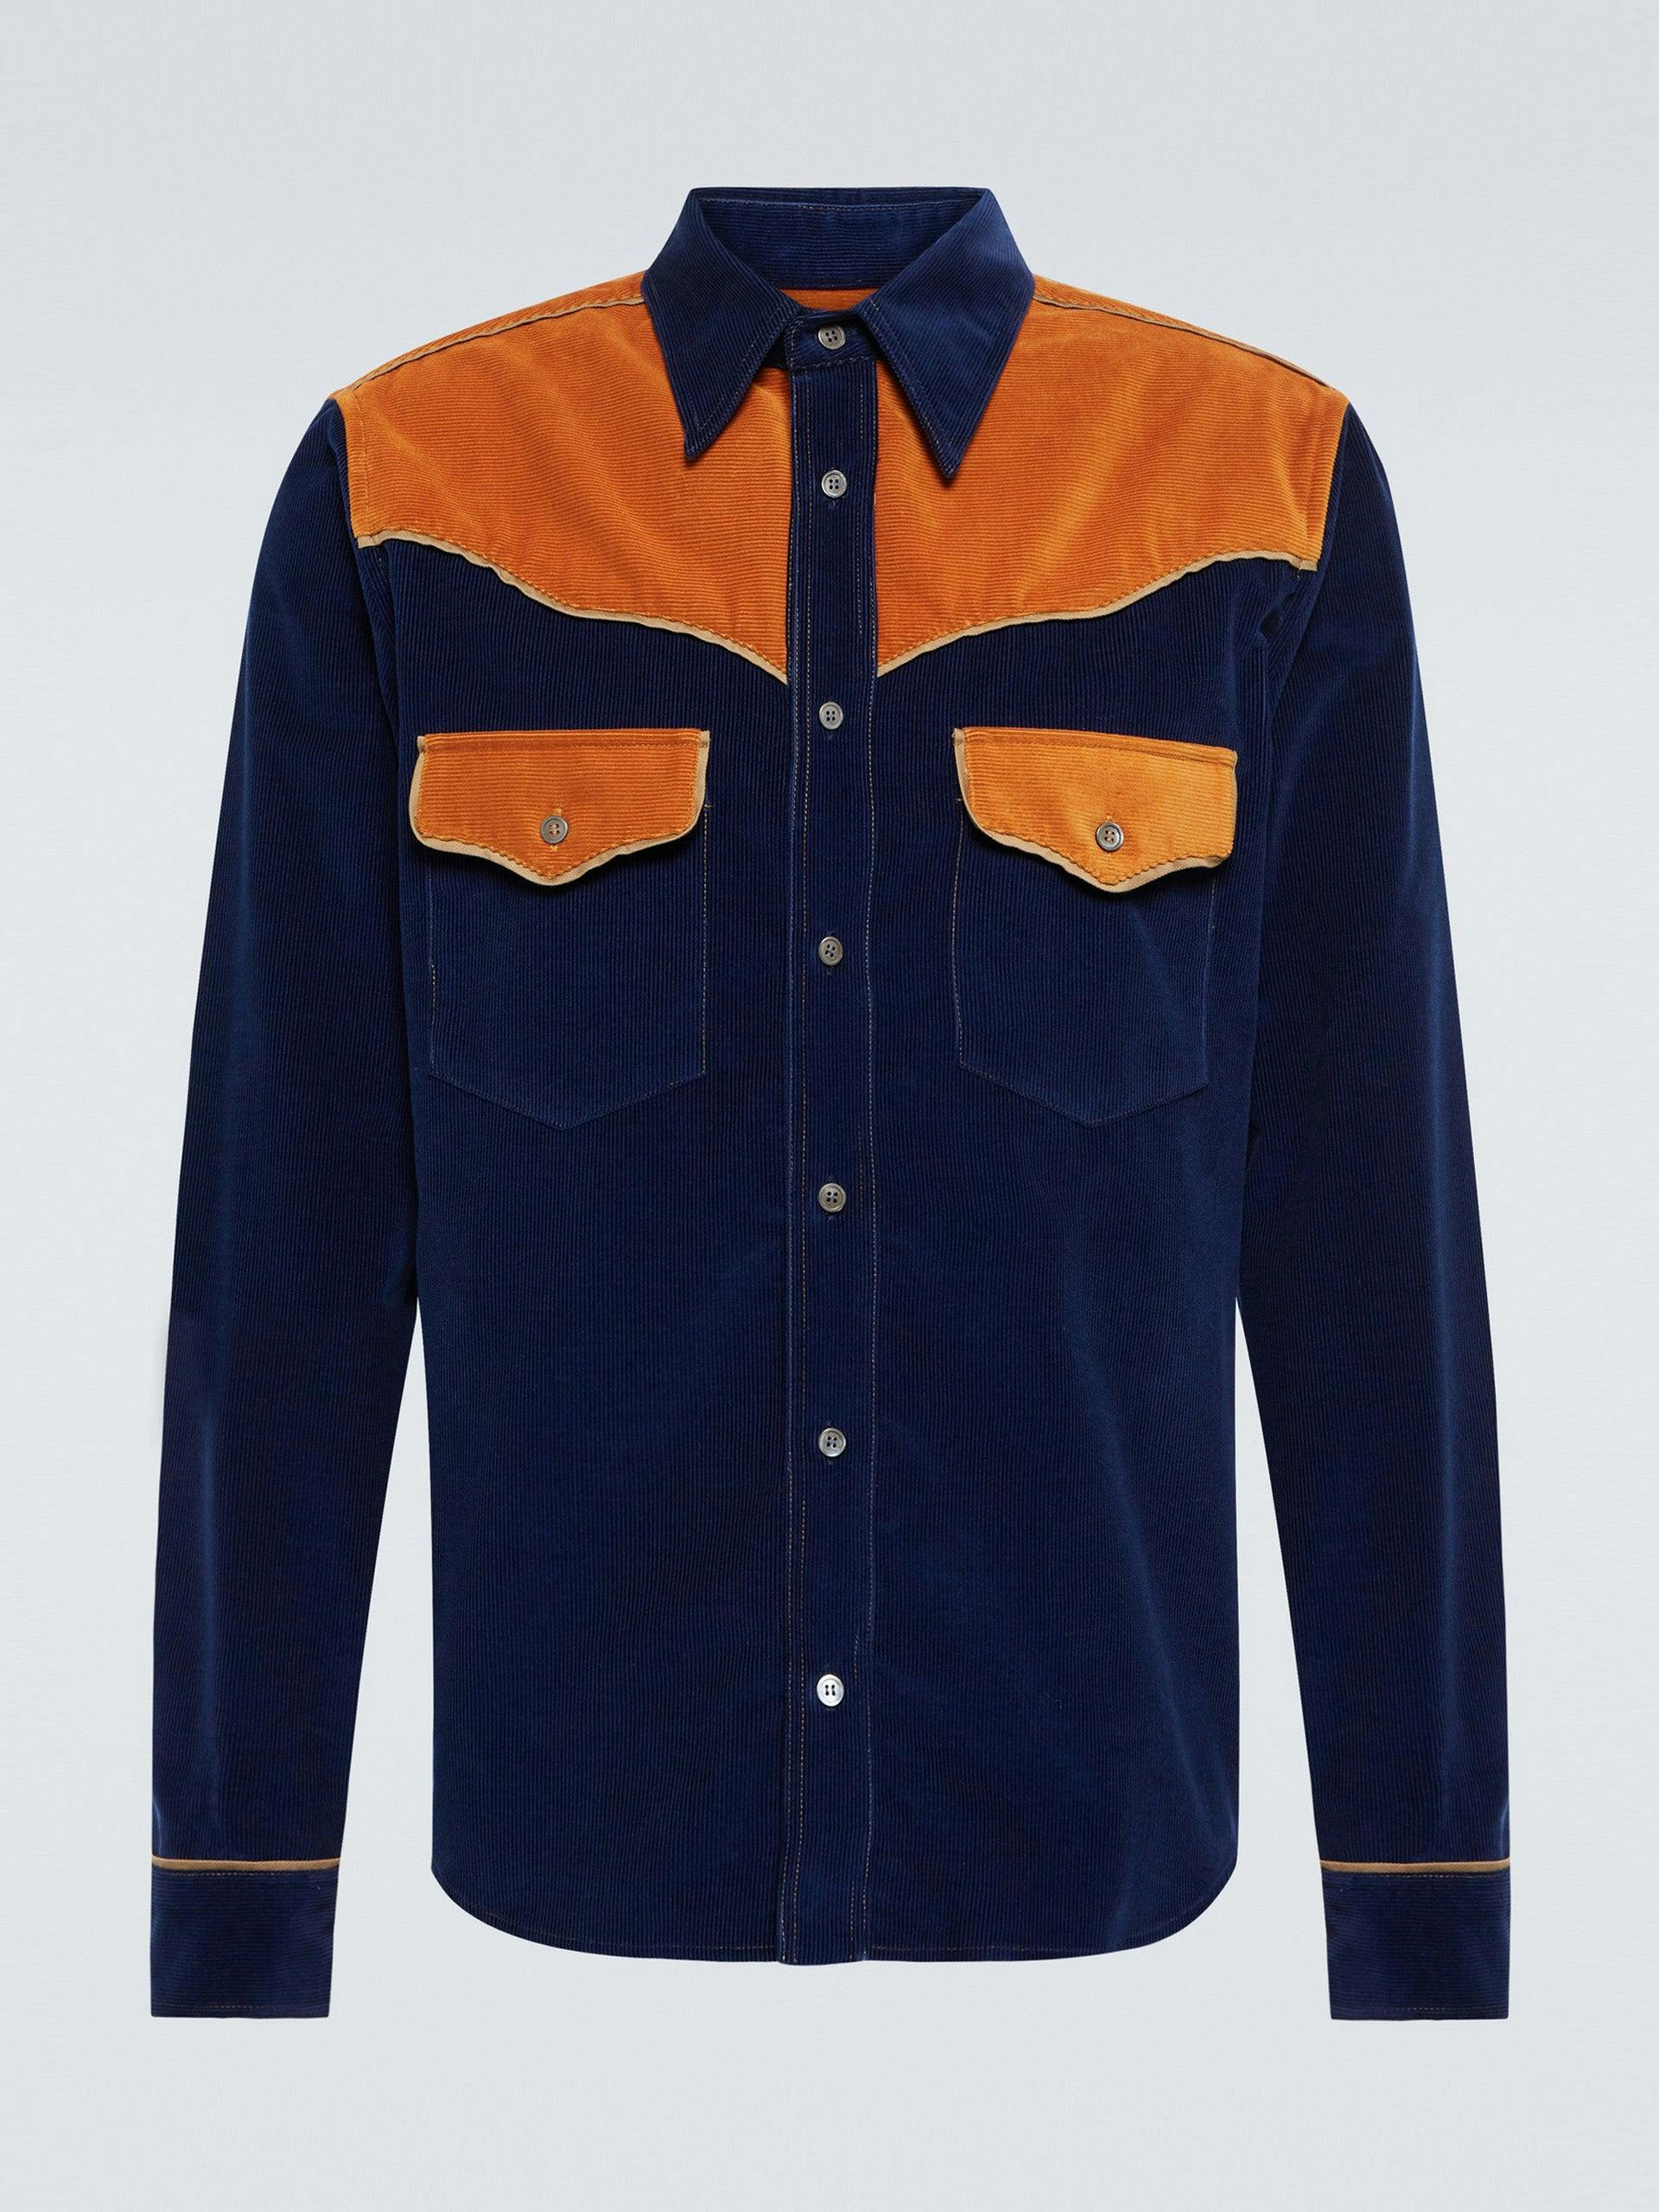 Navy and orange corduroy Western shirt